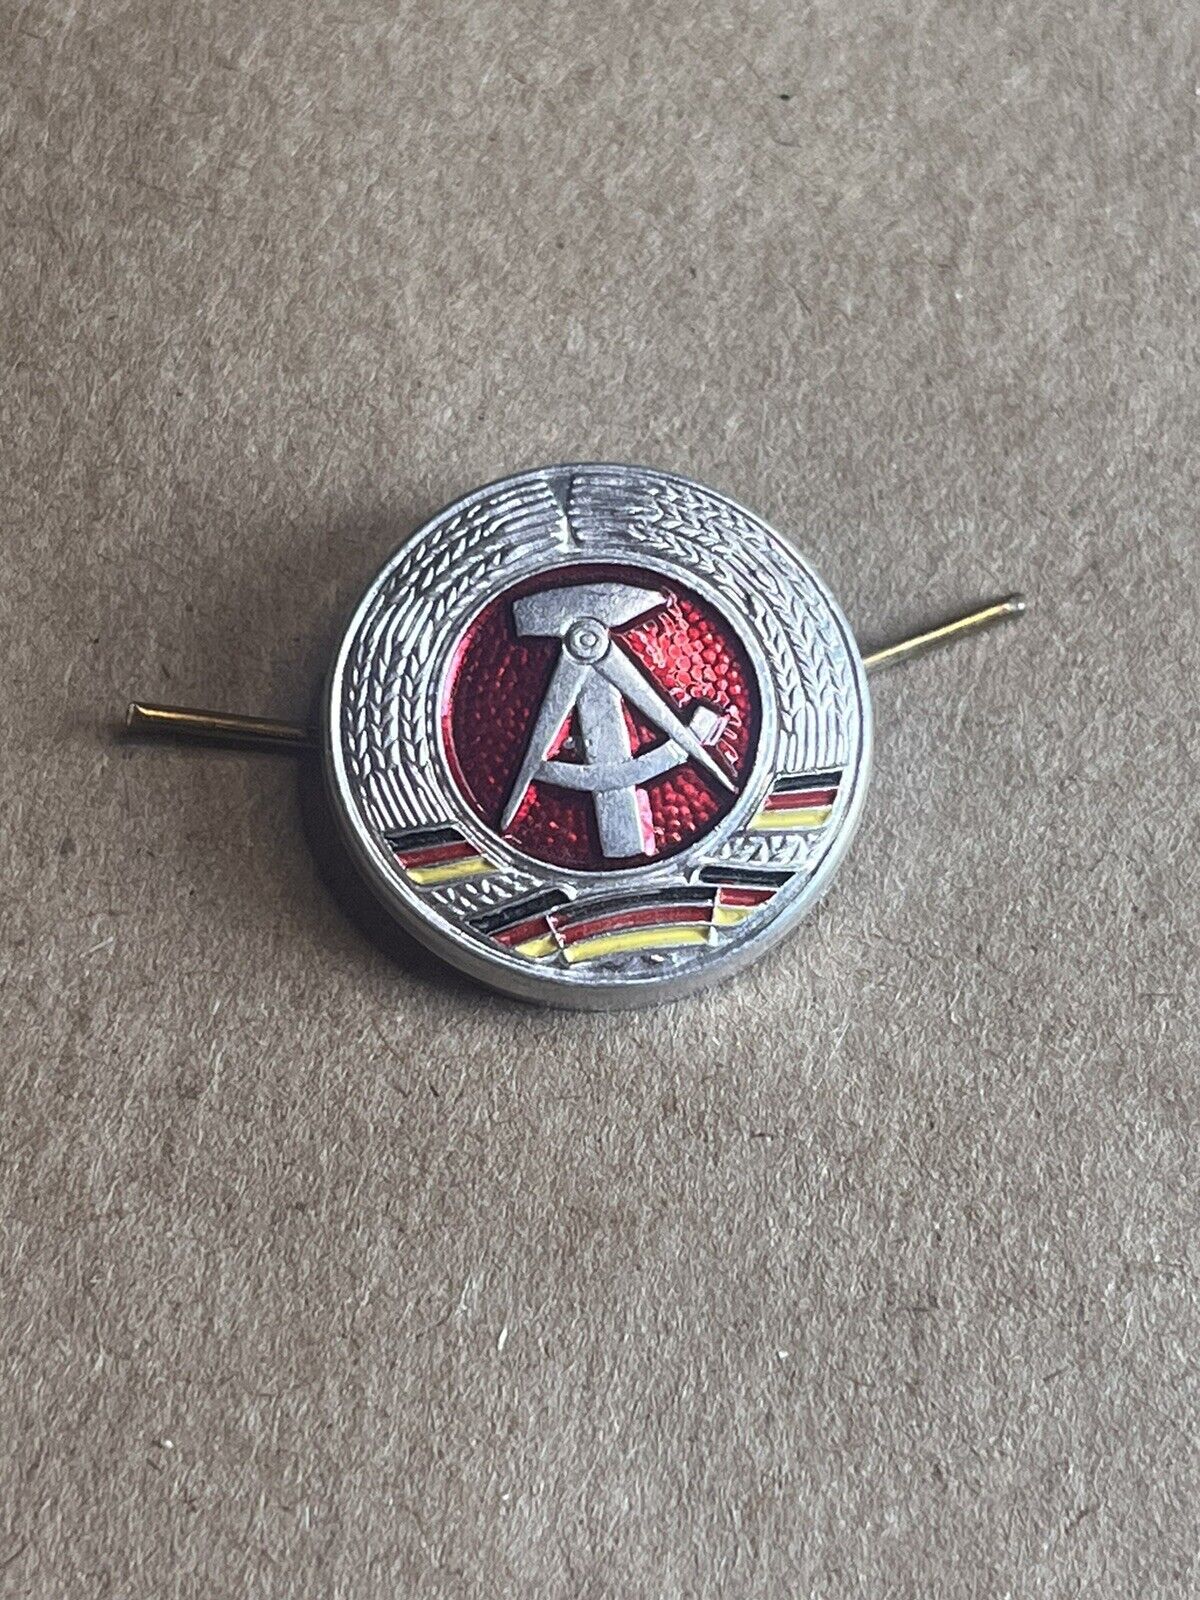 Vintage Soviet & German pin